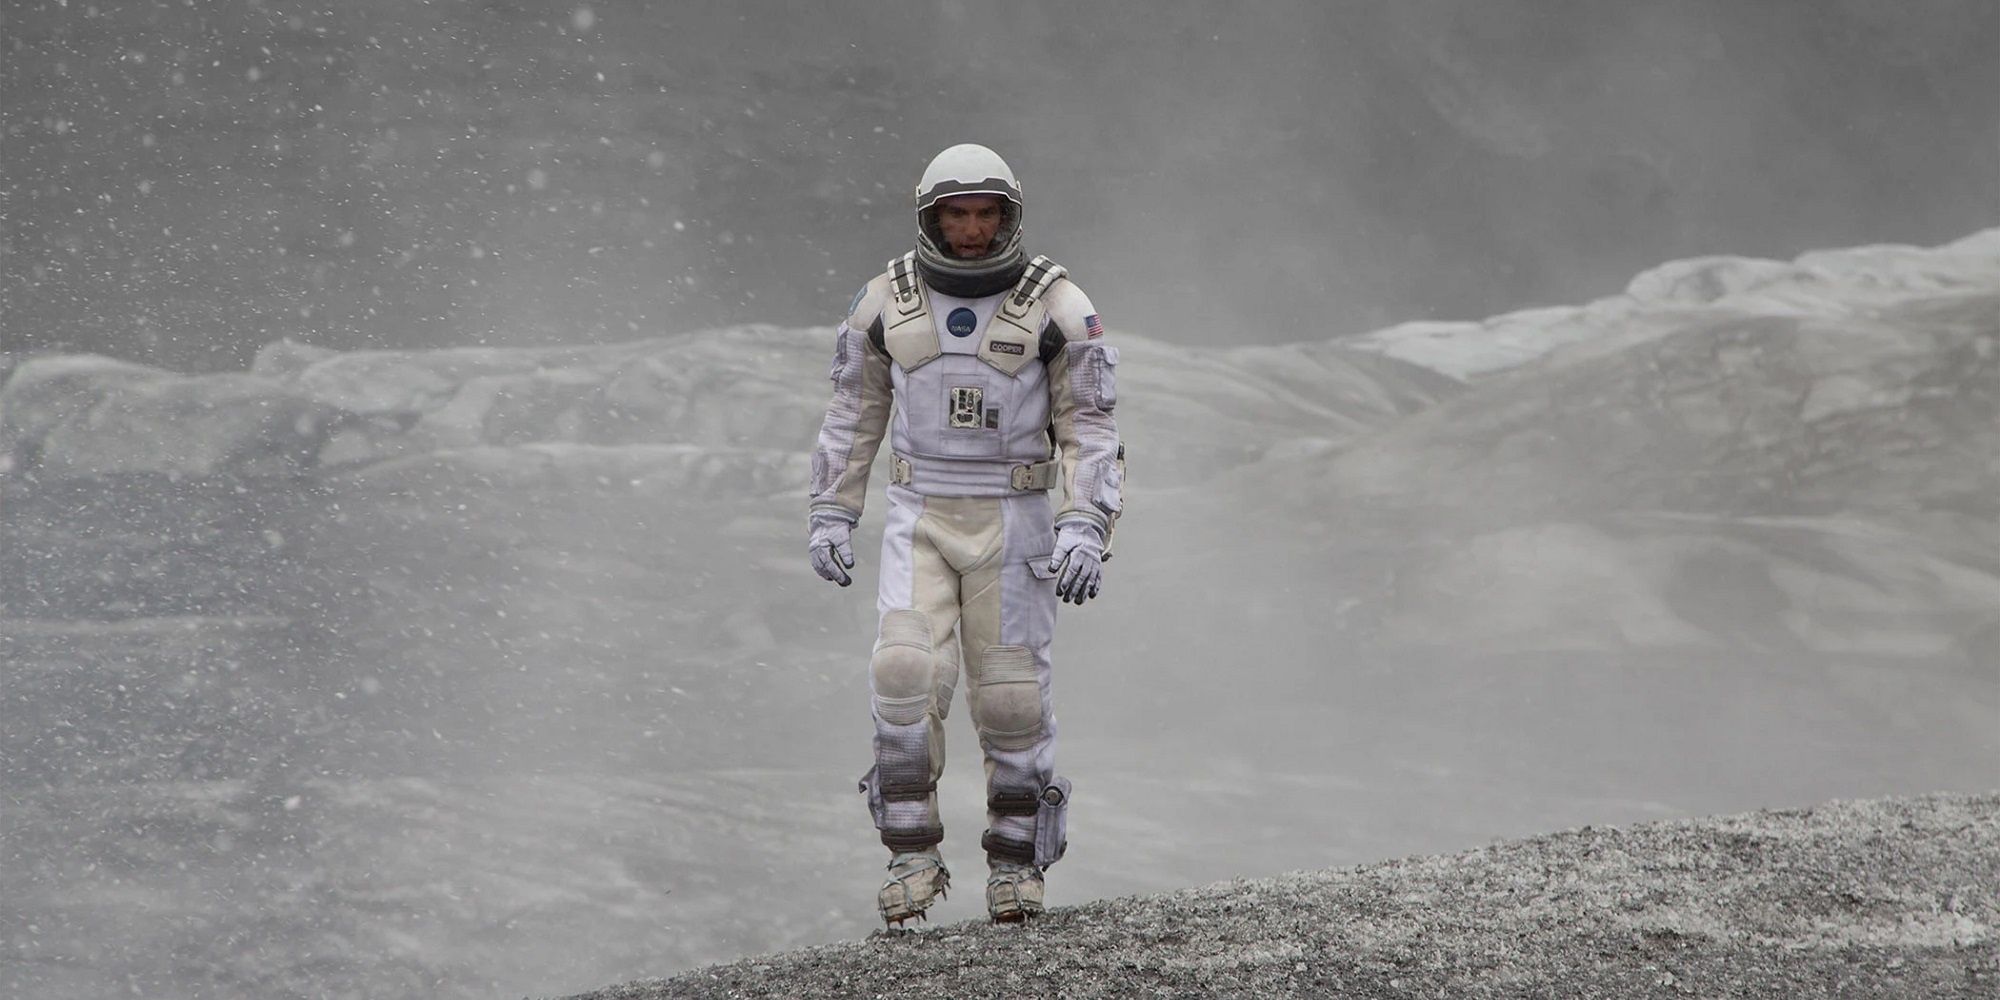 Cooper walking on the ice planet in Interstellar.